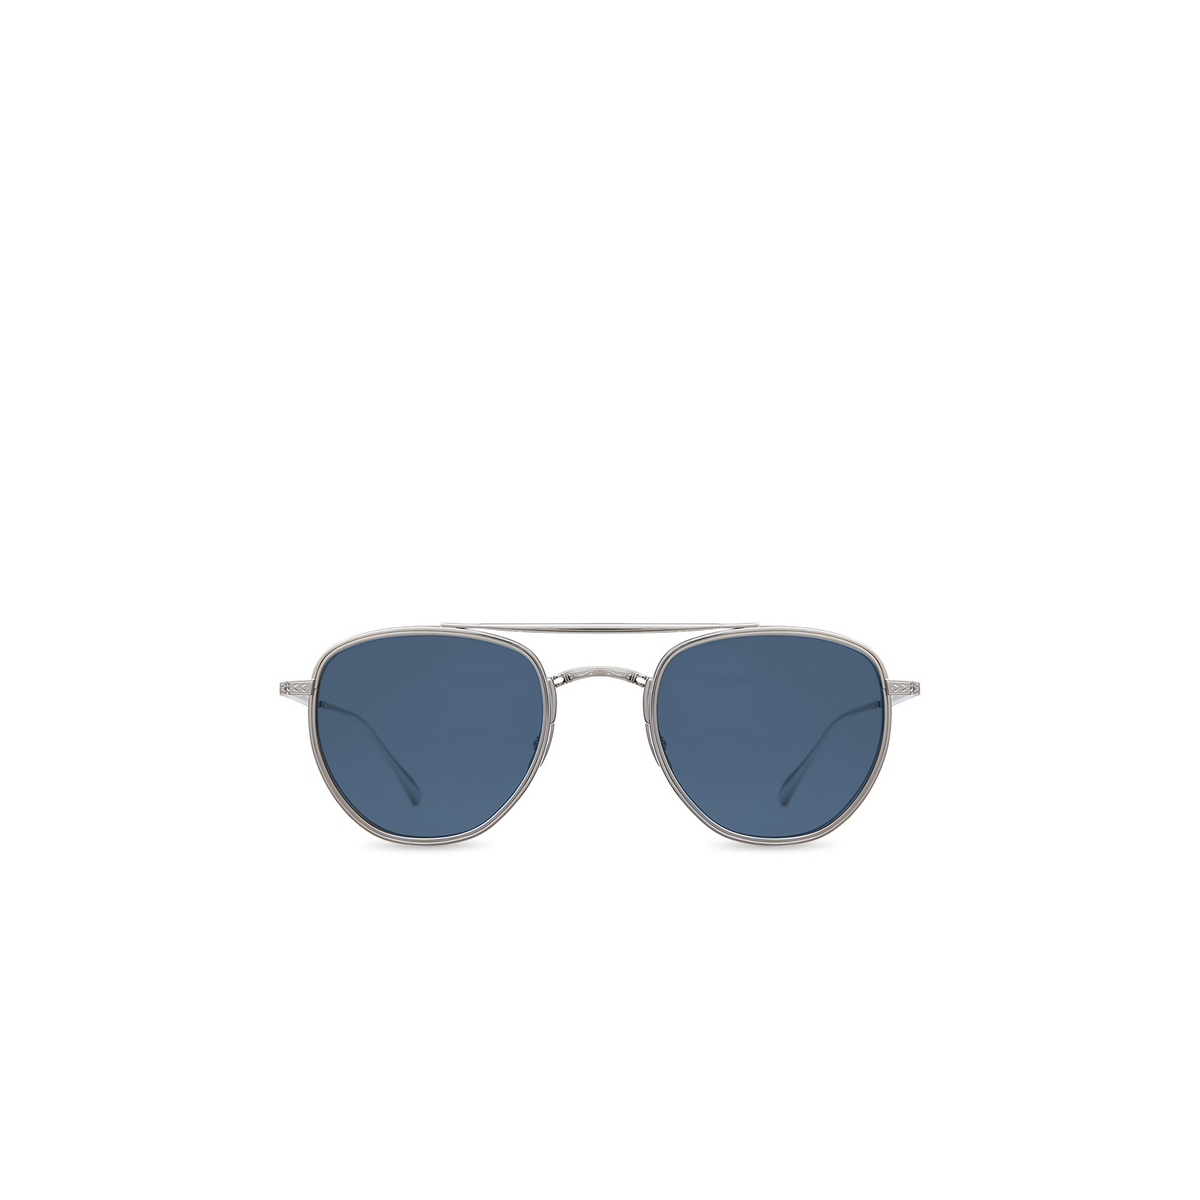 Mr. Leight® Aviator Sunglasses: Roku Ii S color Platinum/blue Plt/blu - front view.